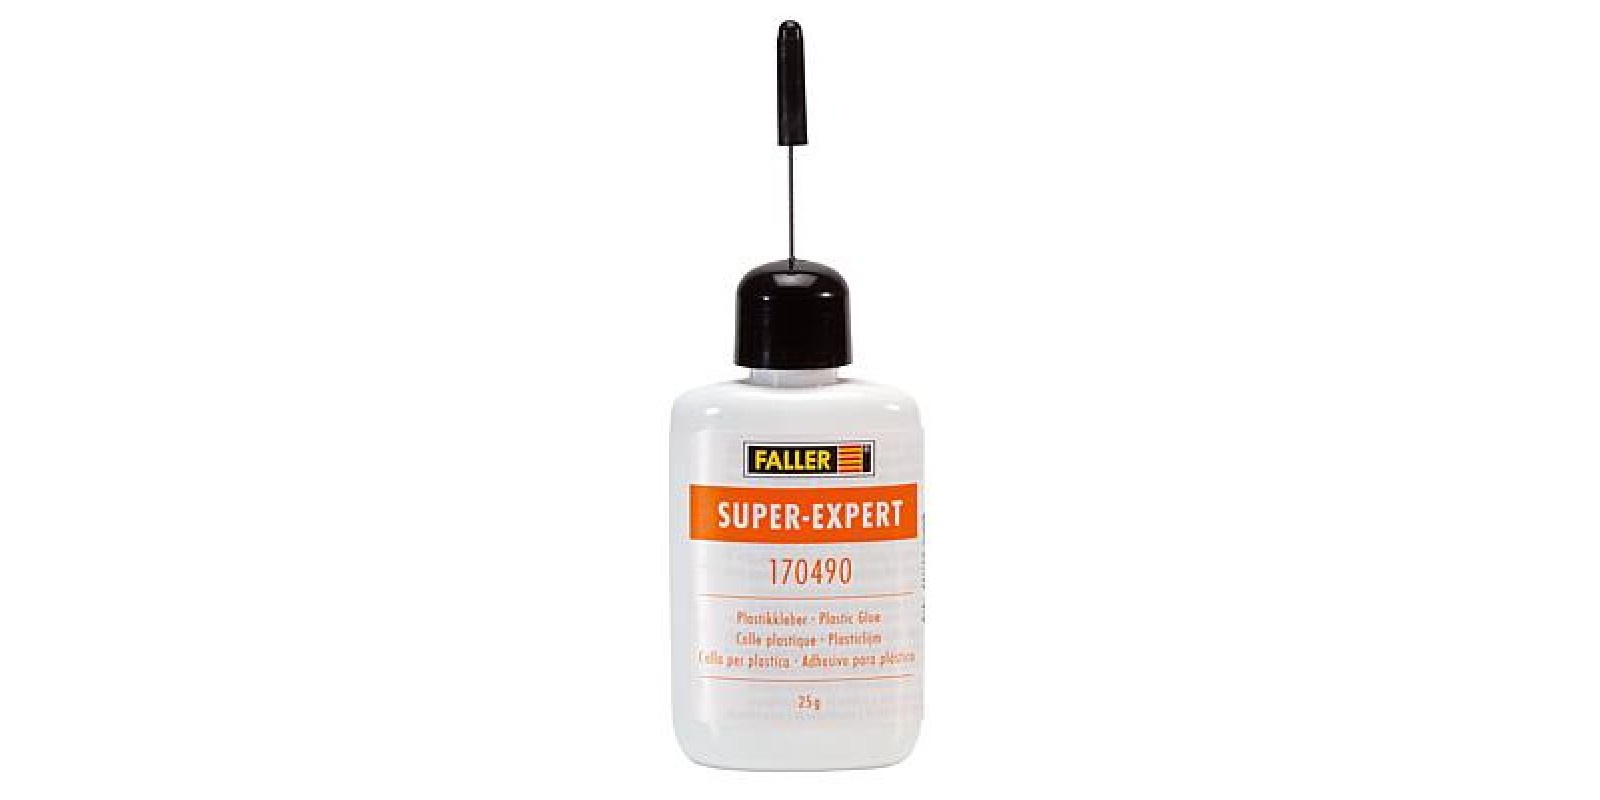 Fa170490 	 SUPER-EXPERT, Plastic Glue, 25 g